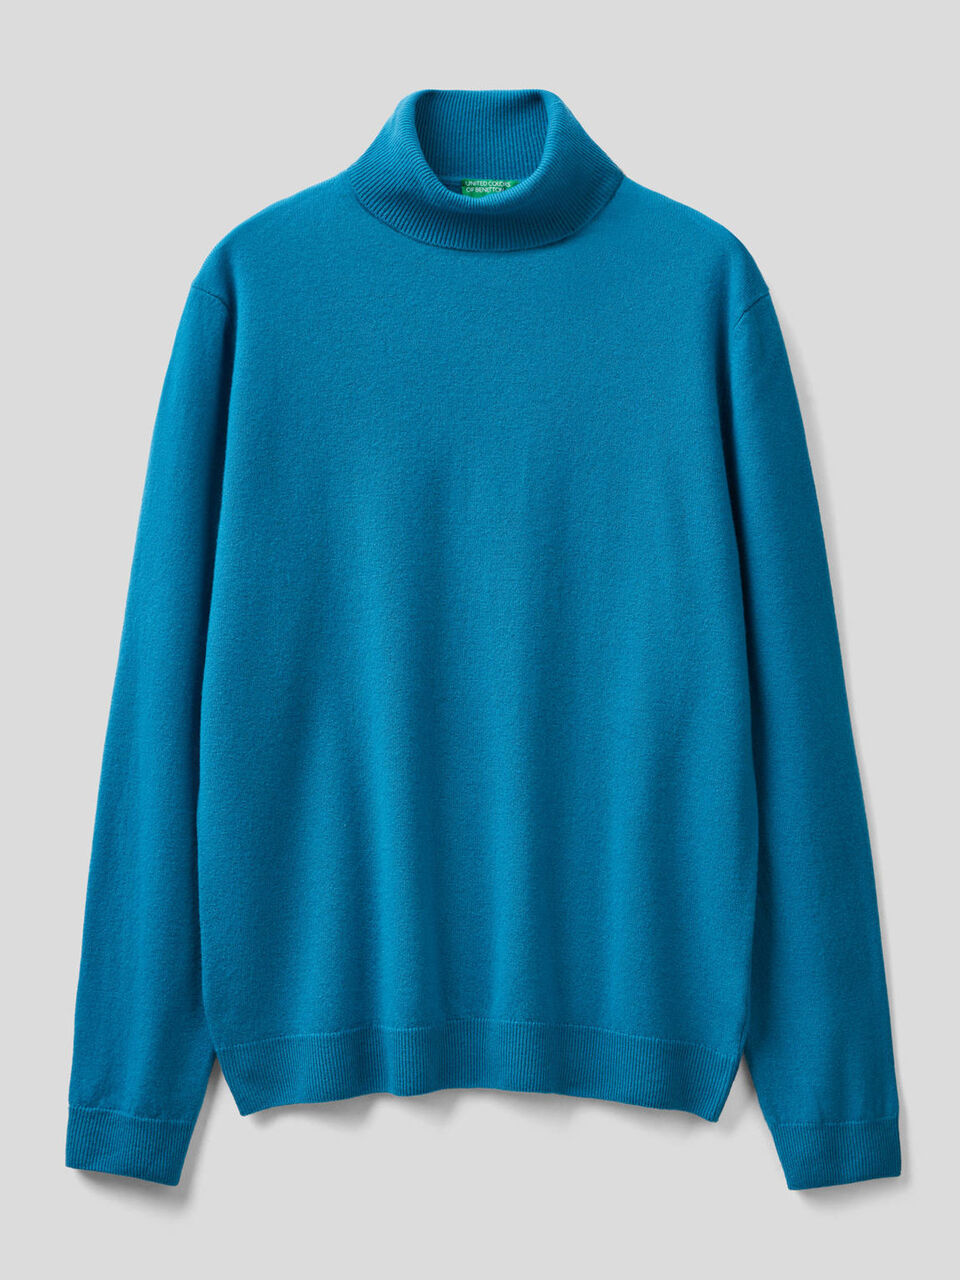 Teal turtleneck sweater in pure Merino wool - Teal